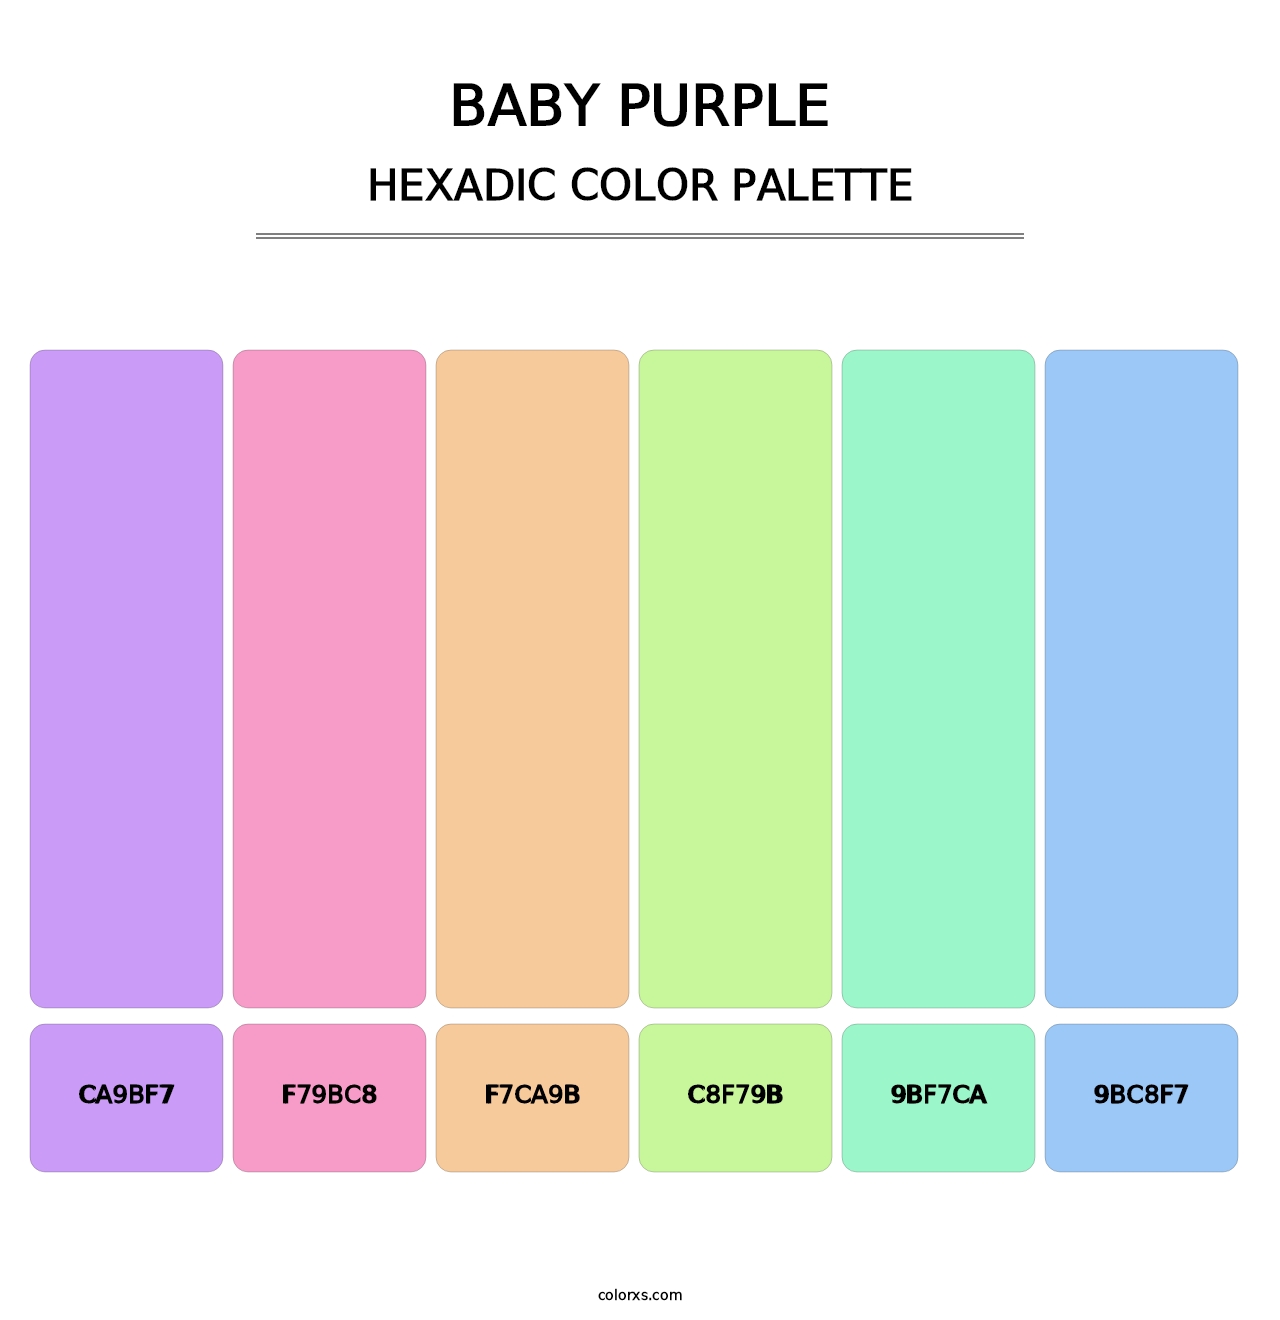 Baby Purple - Hexadic Color Palette